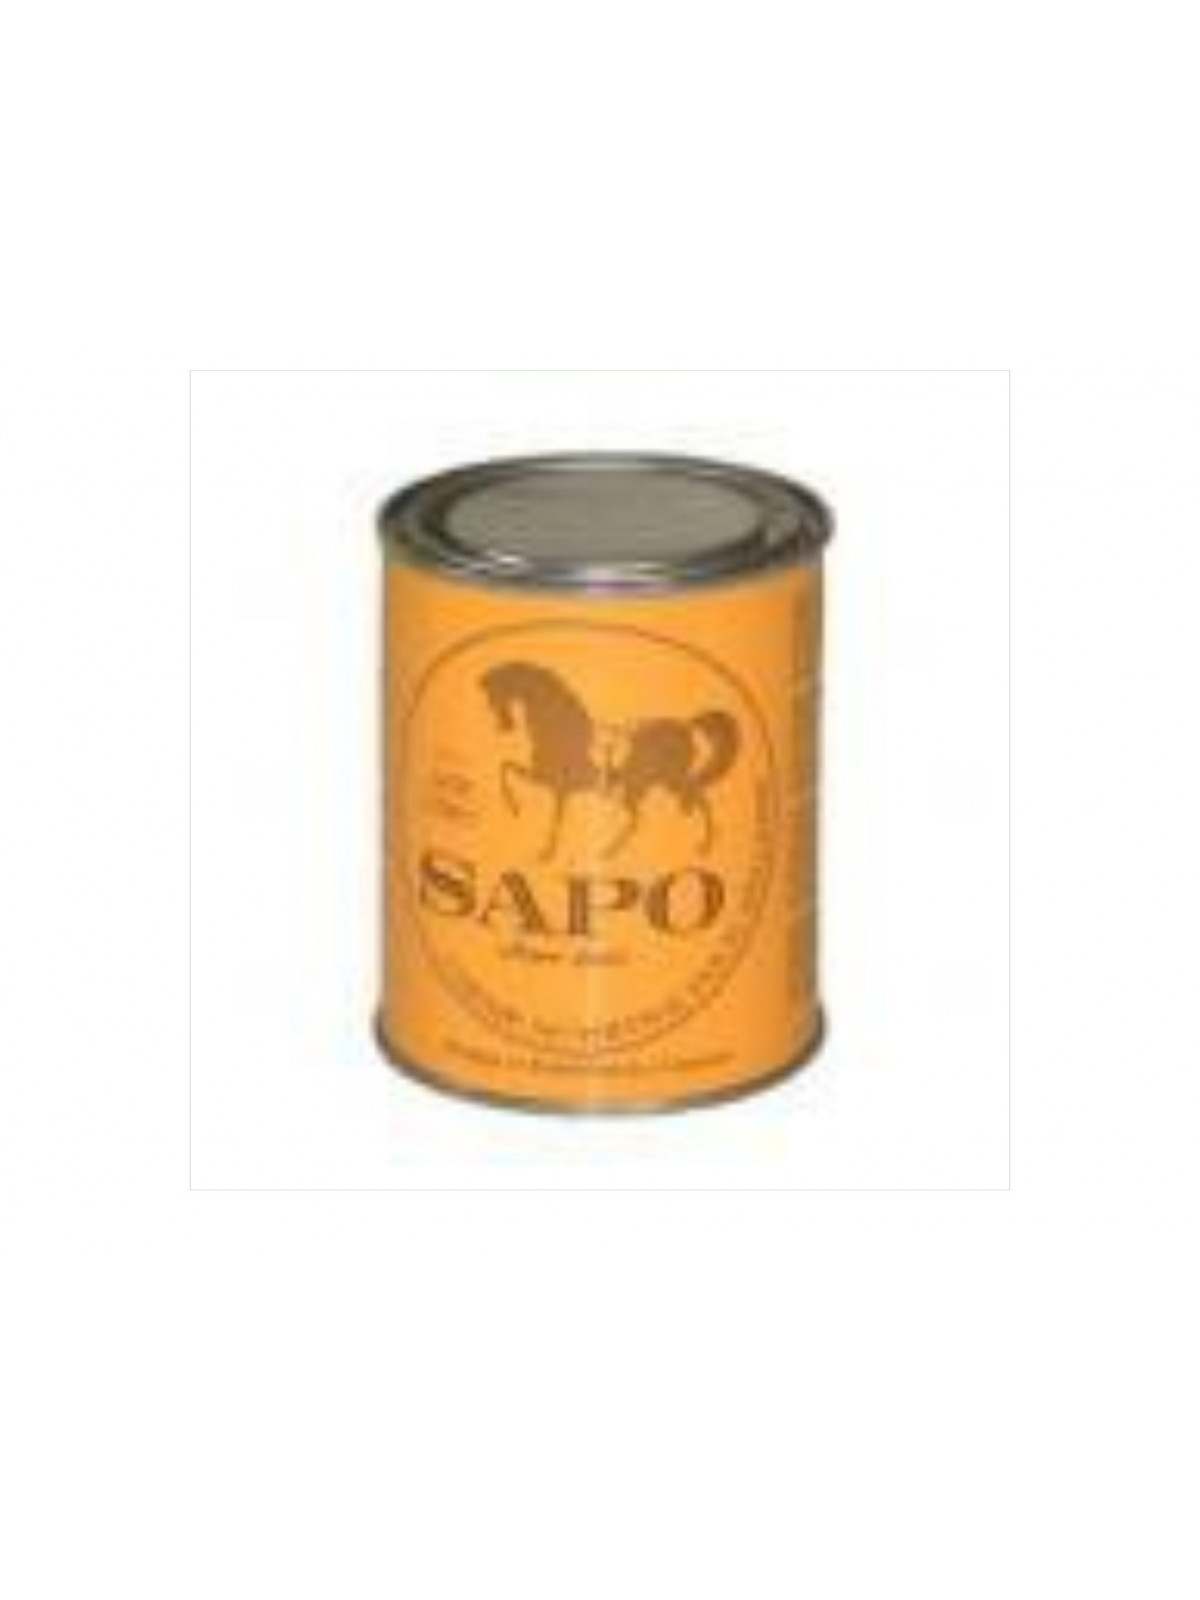 SAPO crème nutritive 750ml